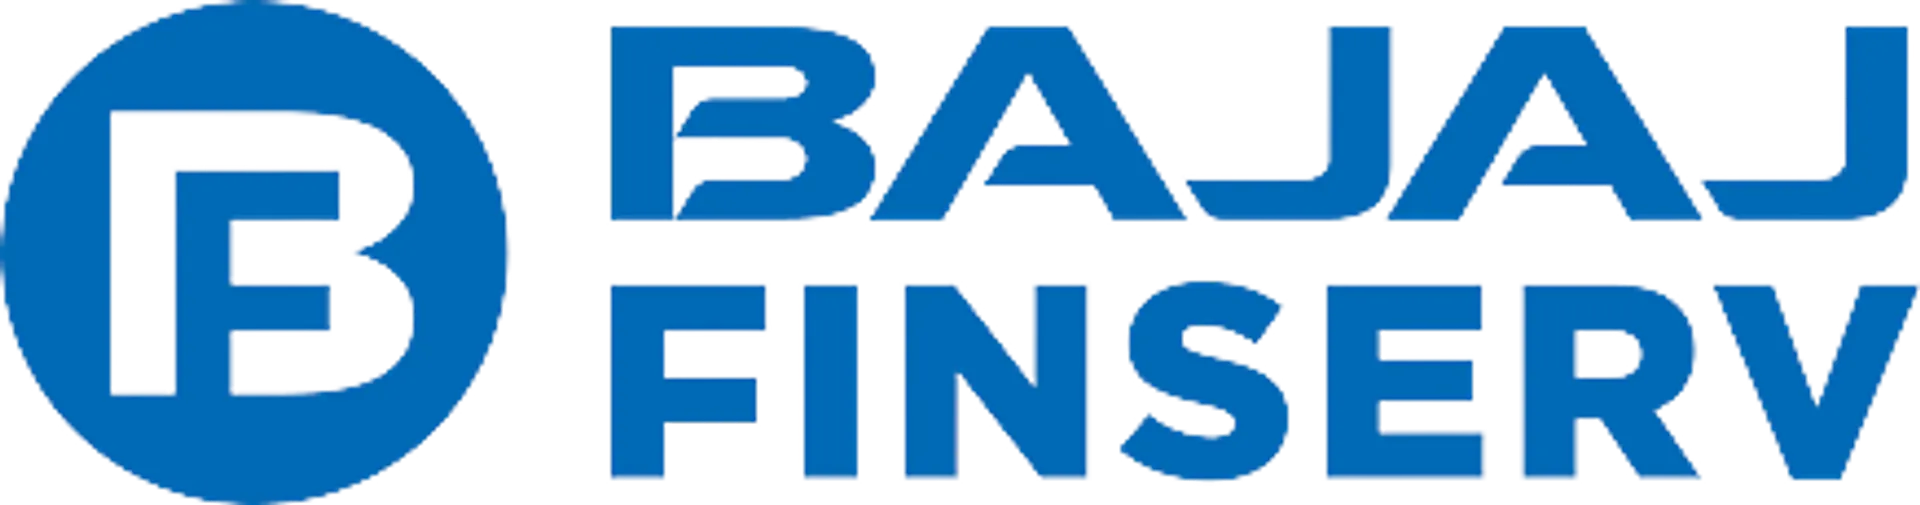 BAJAJ FINSERV logo. Current catalogue